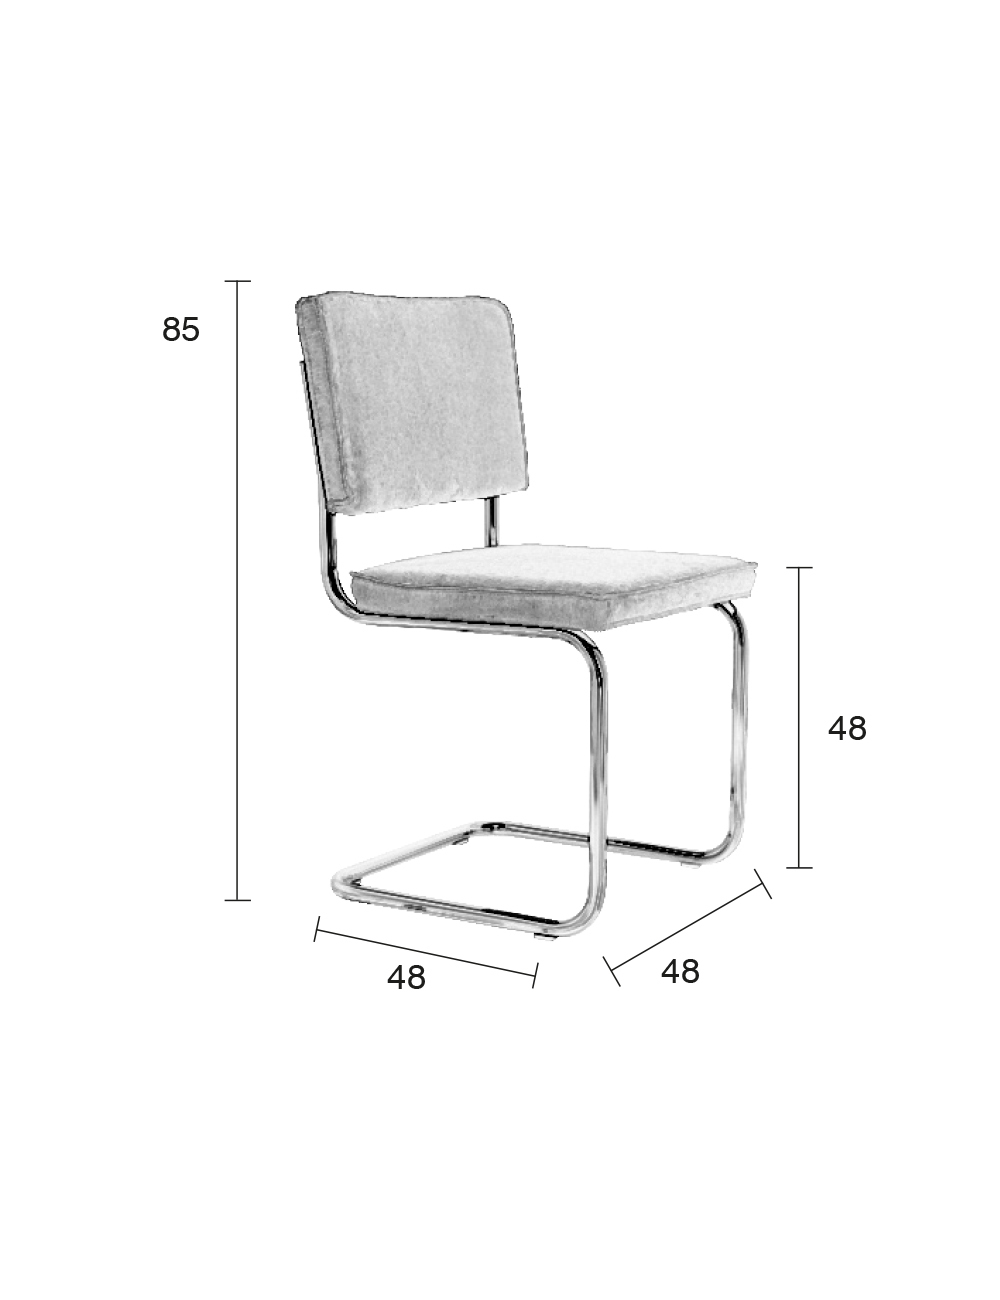 https://www.fundesign.nl/media/catalog/product/r/i/ridge-rib-chair-size_8.jpg